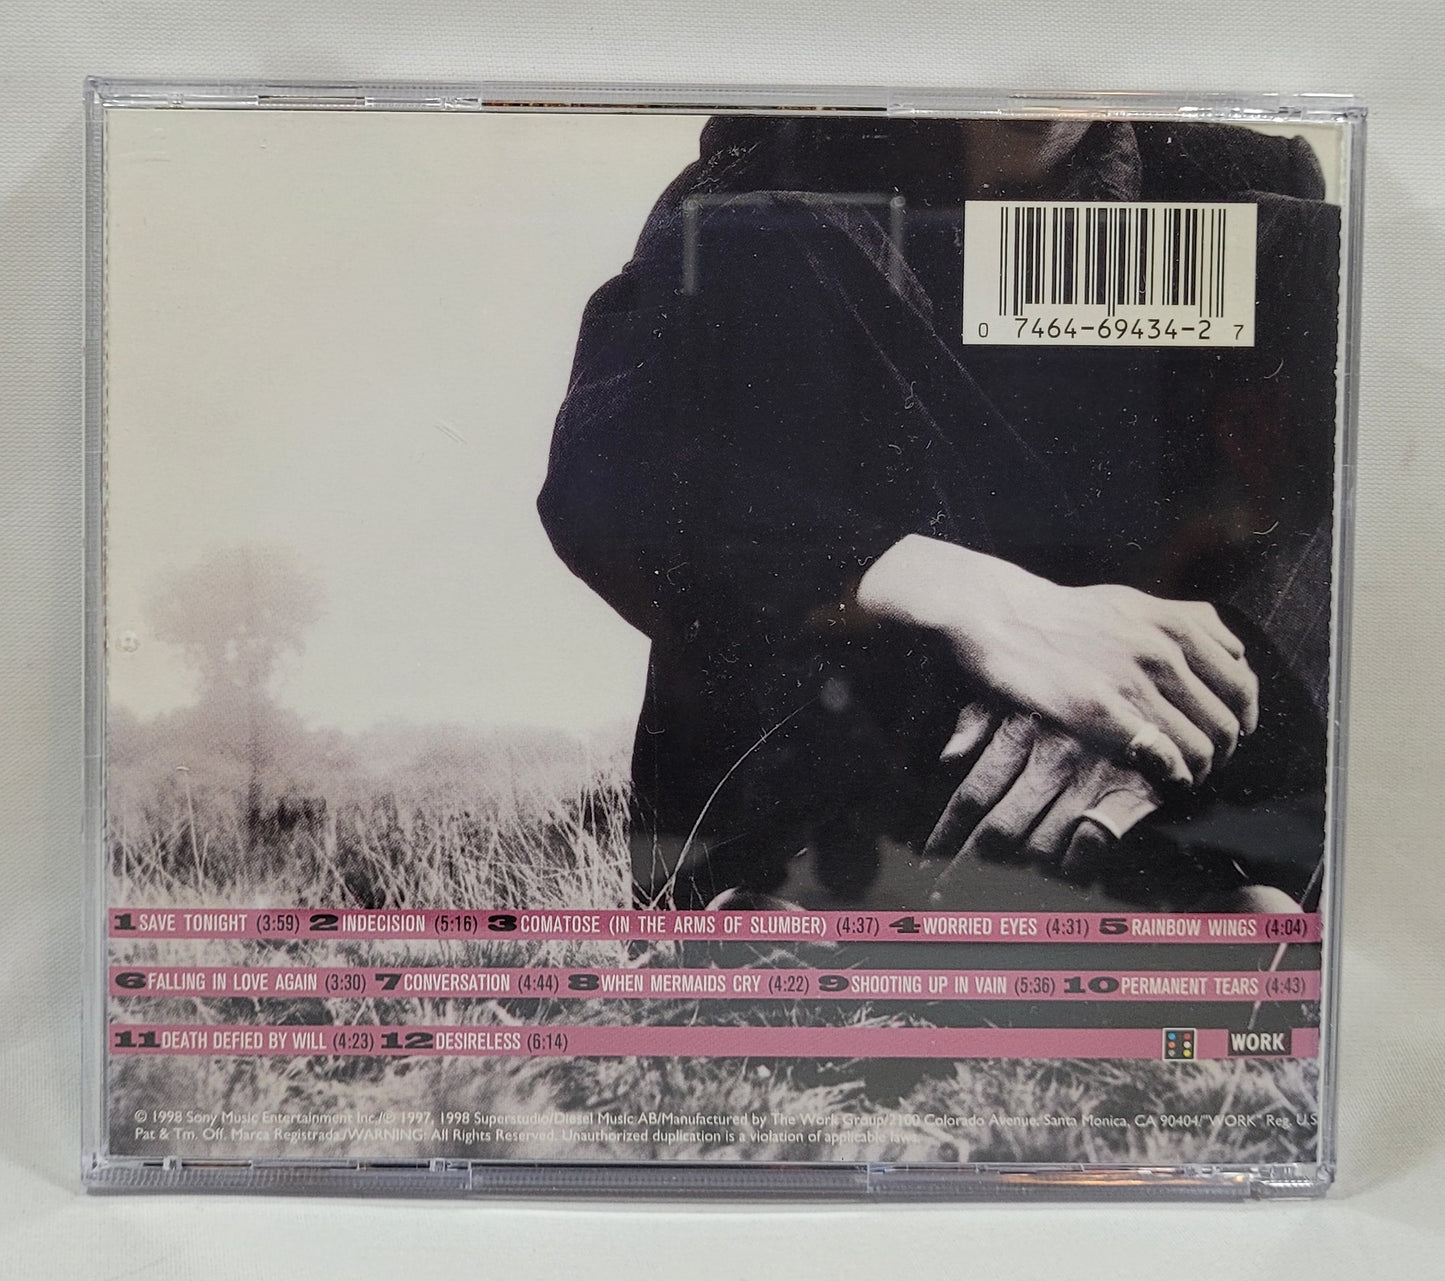 Eagle-Eye Cherry - Desireless [CD]